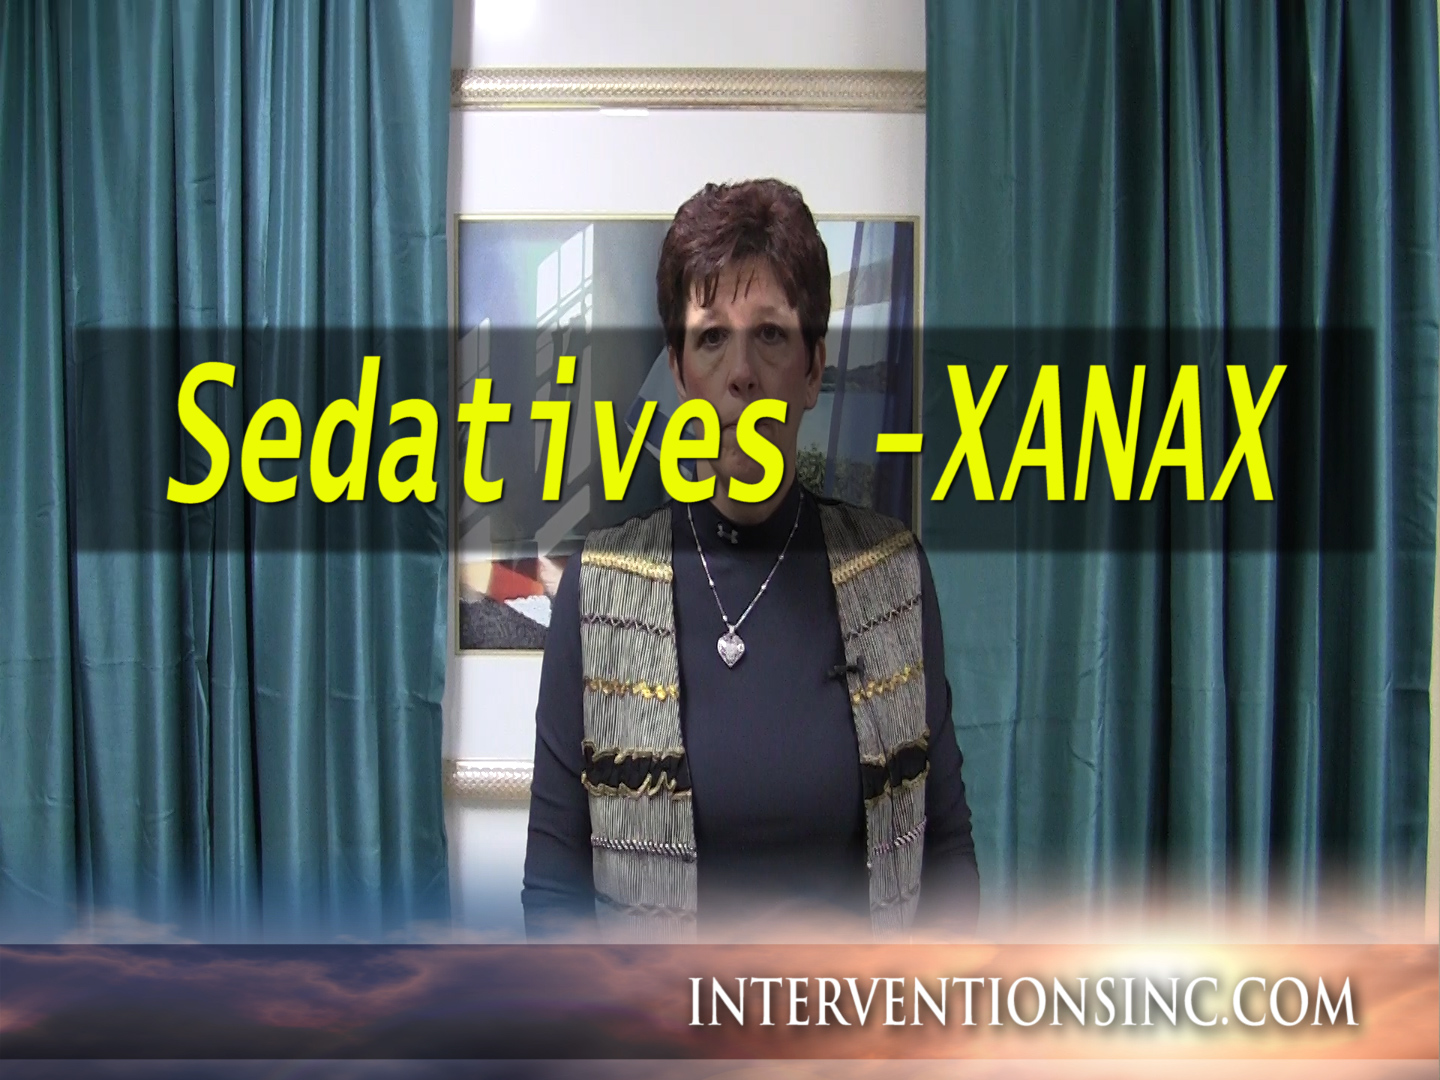 Xanax – Impact of Sedatives